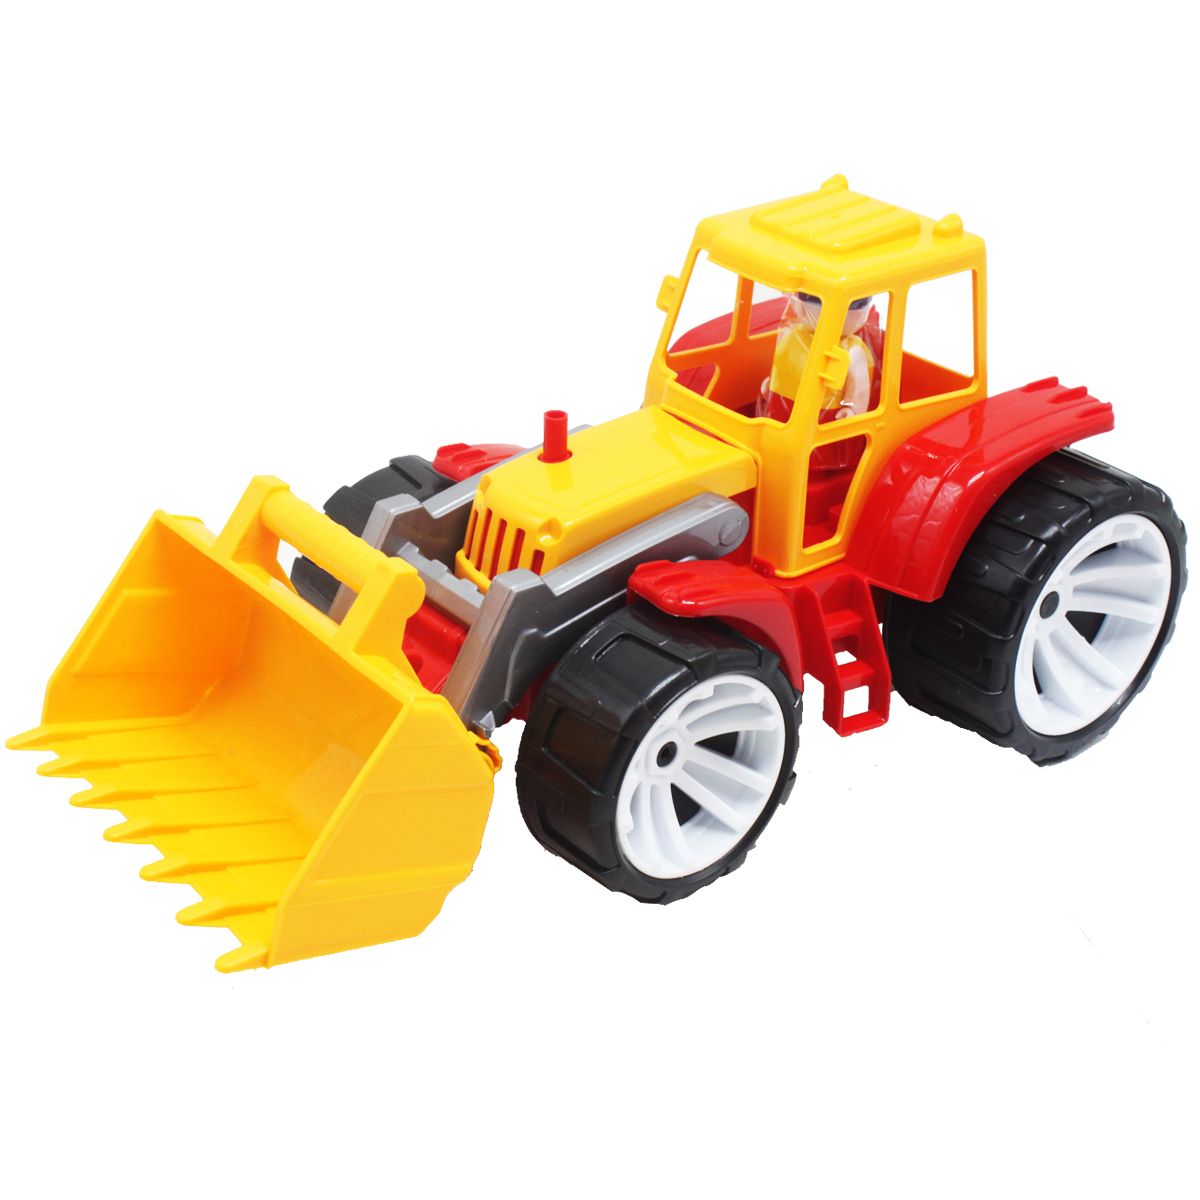 Пластиковая игрушка "Трактор", желтый